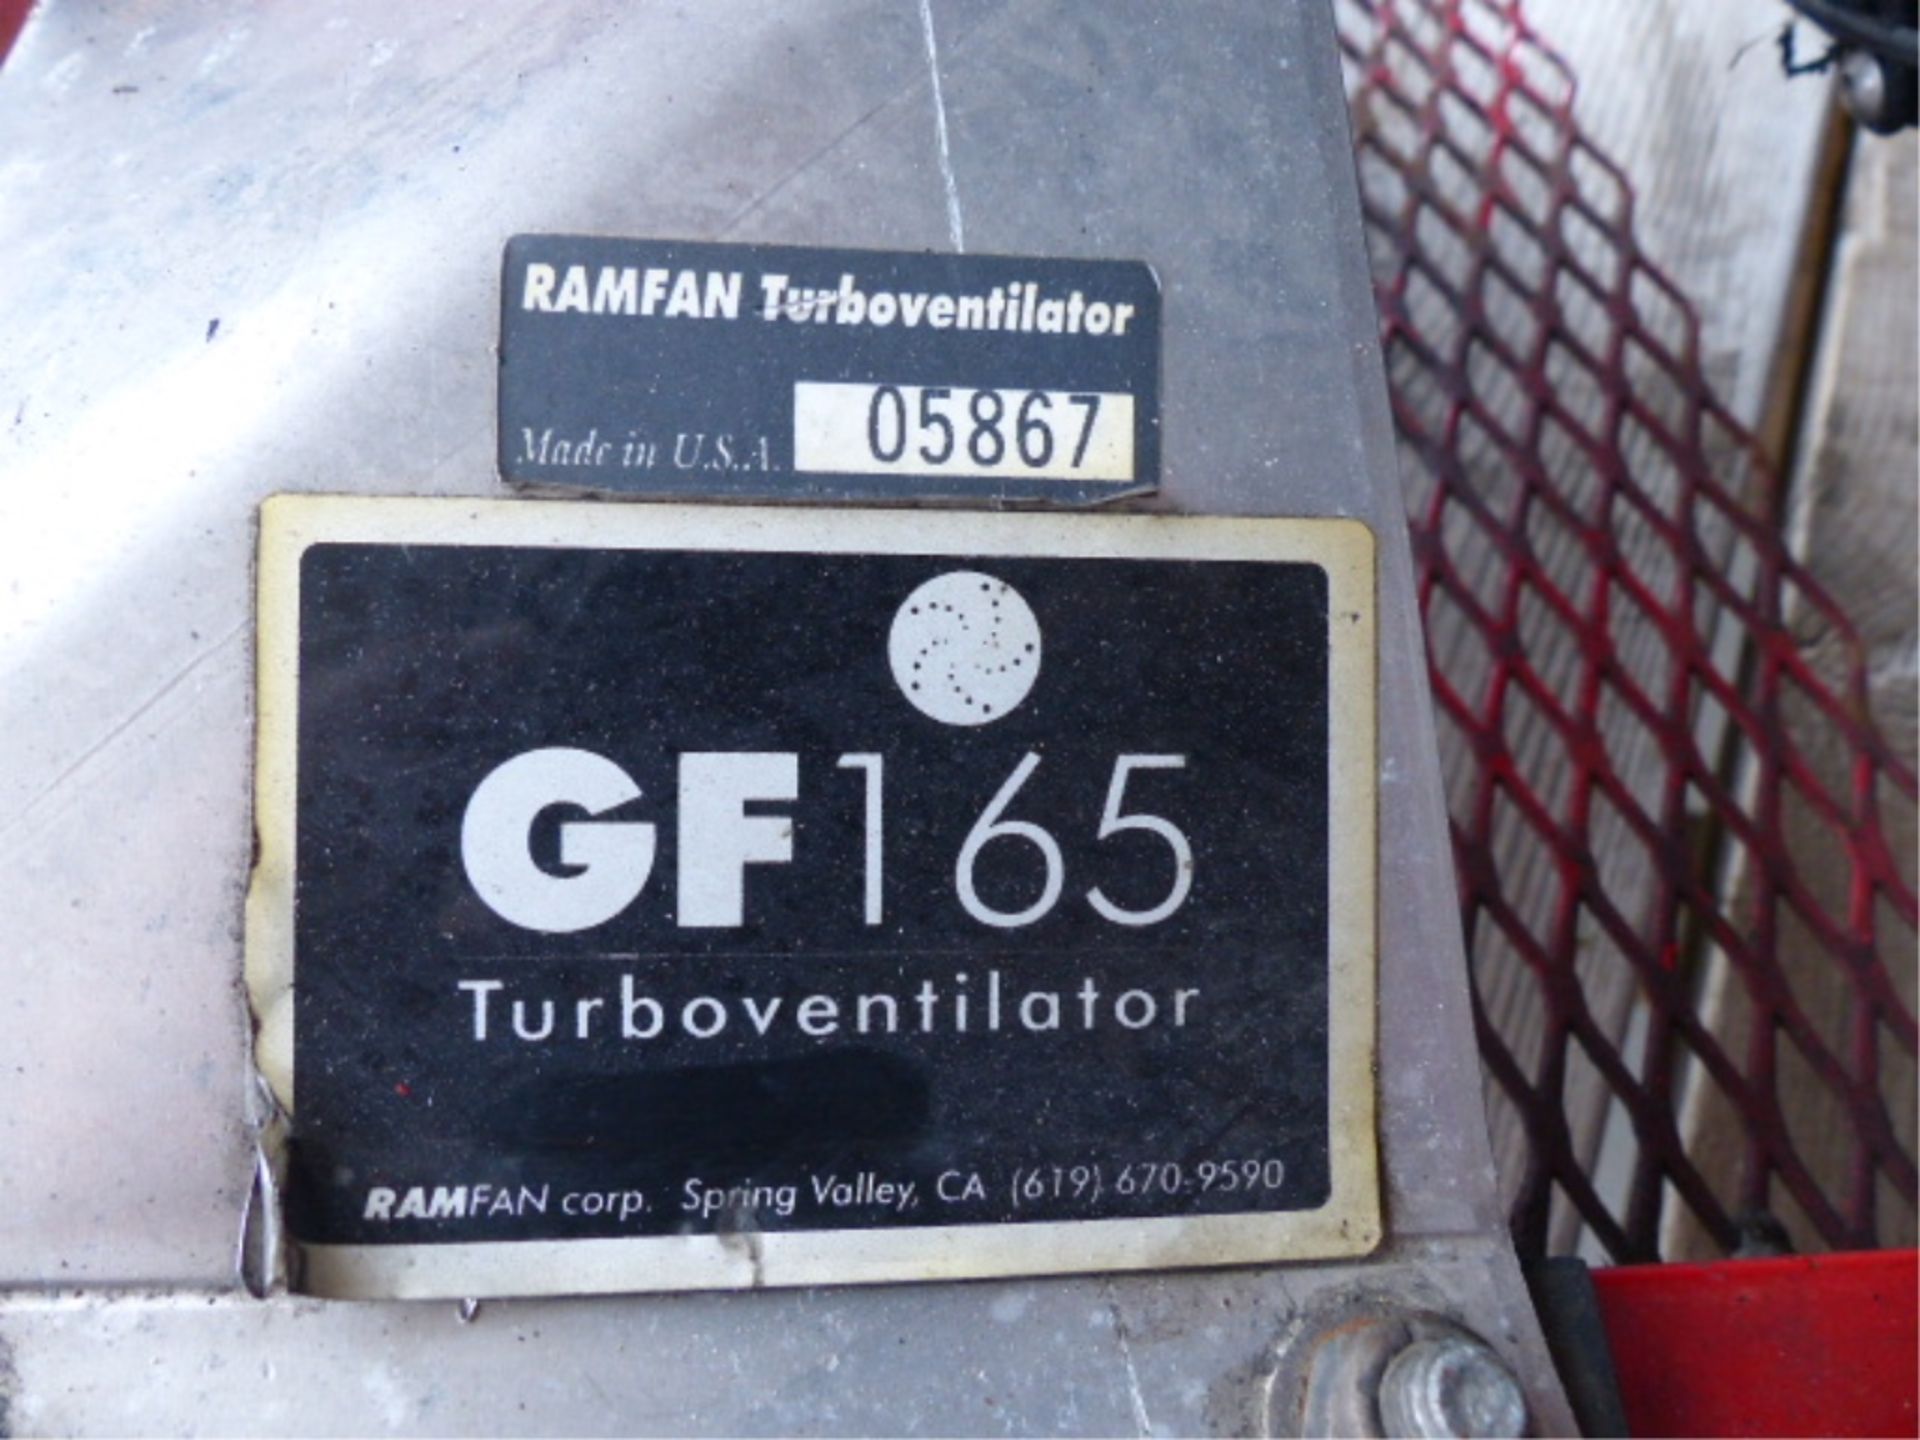 RAMFAN TURBOVENTILATOR GF165 HOMELITE ENGINE. 16" FAN - Image 4 of 4